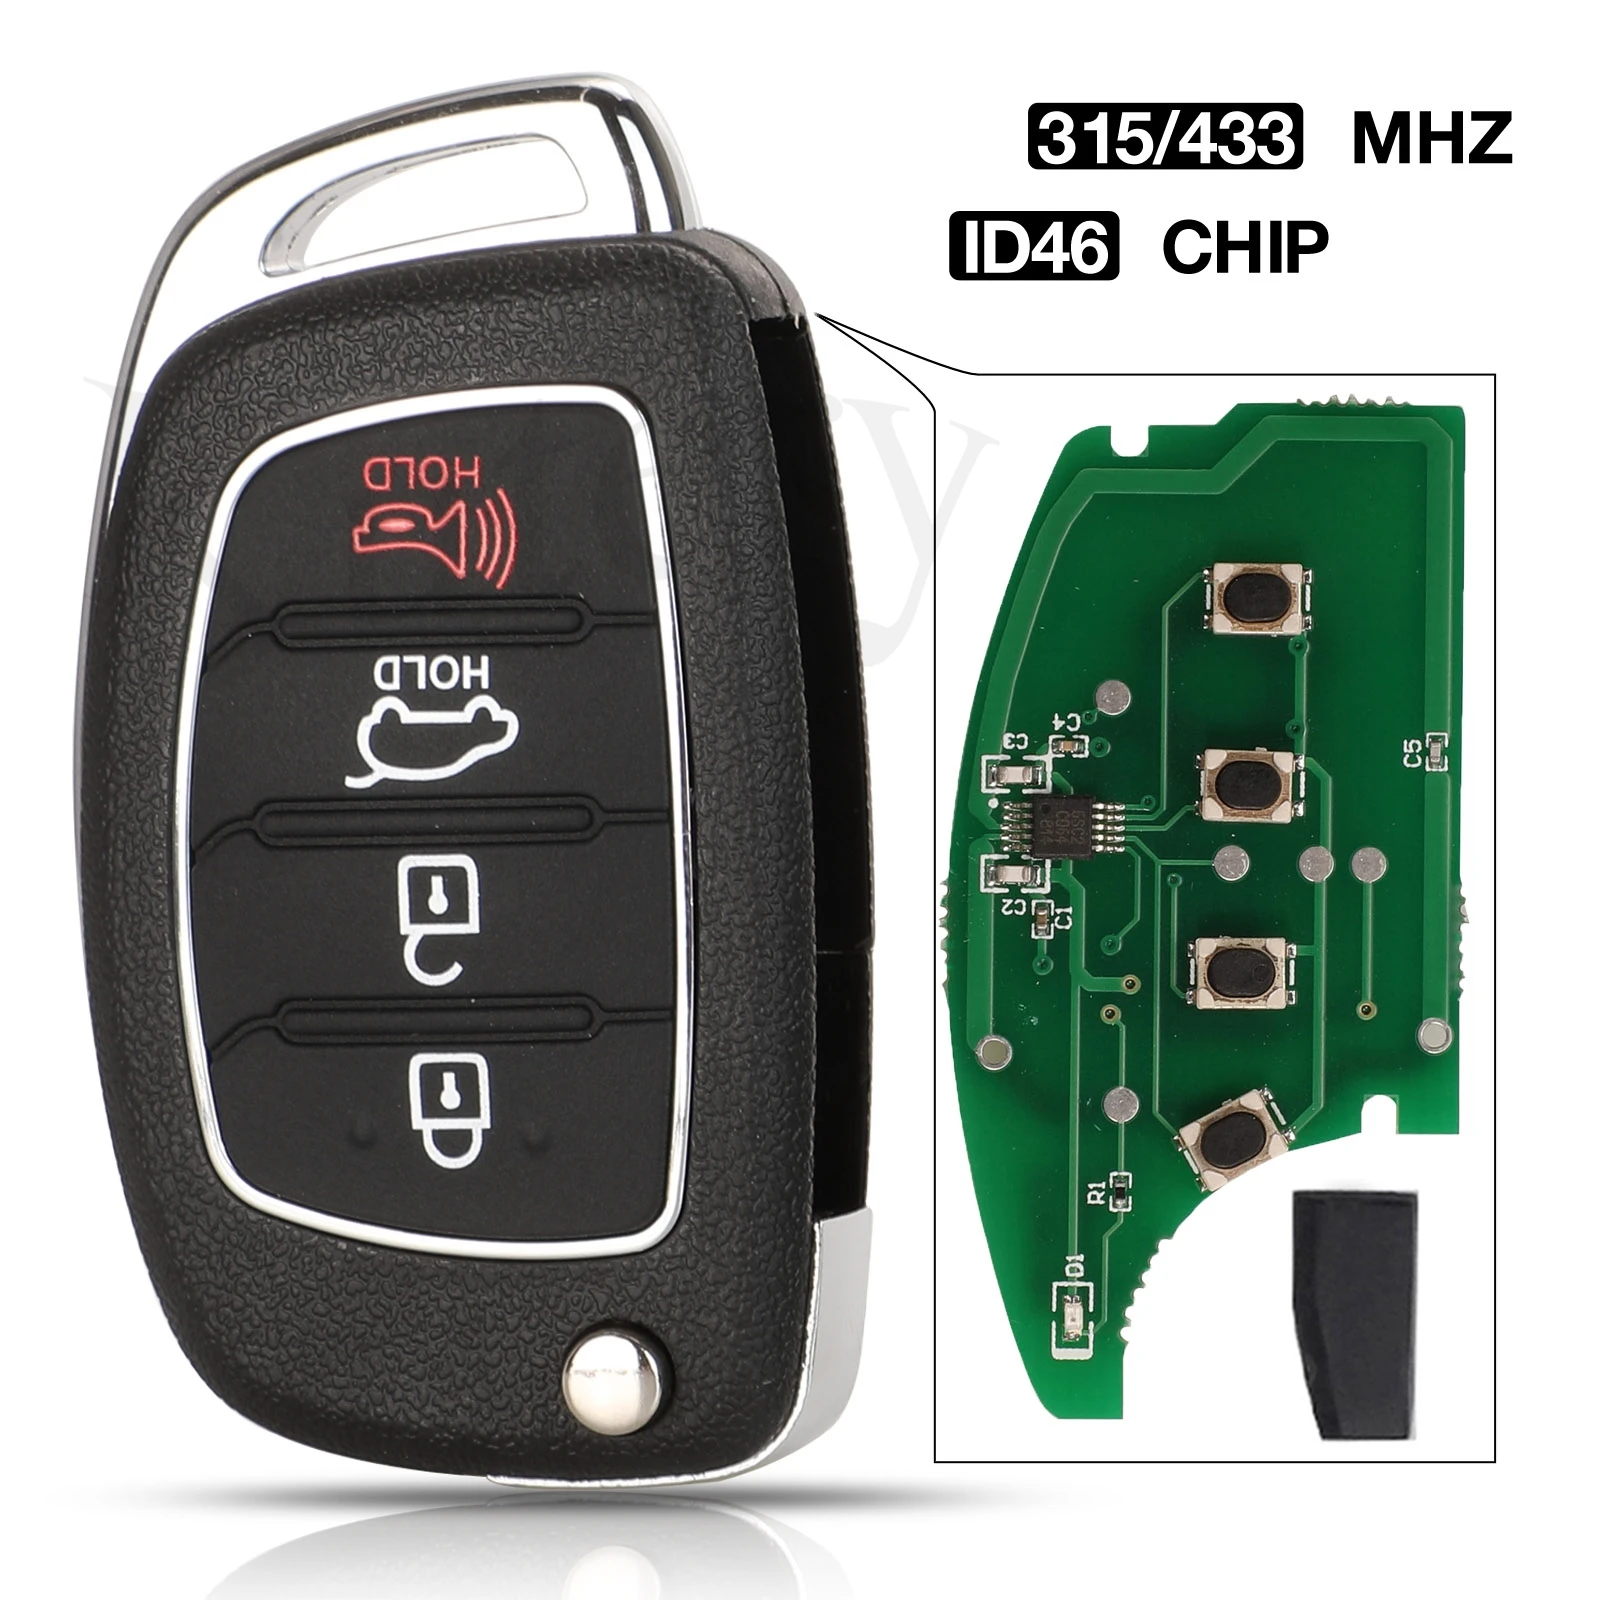 

jingyuqin Remote Flip Key Fob for Hyundai Elantra Accent Ix35 IX45 I30 Solaris Tucson I20 Santa Fe 315/433mhz ID46 Chip